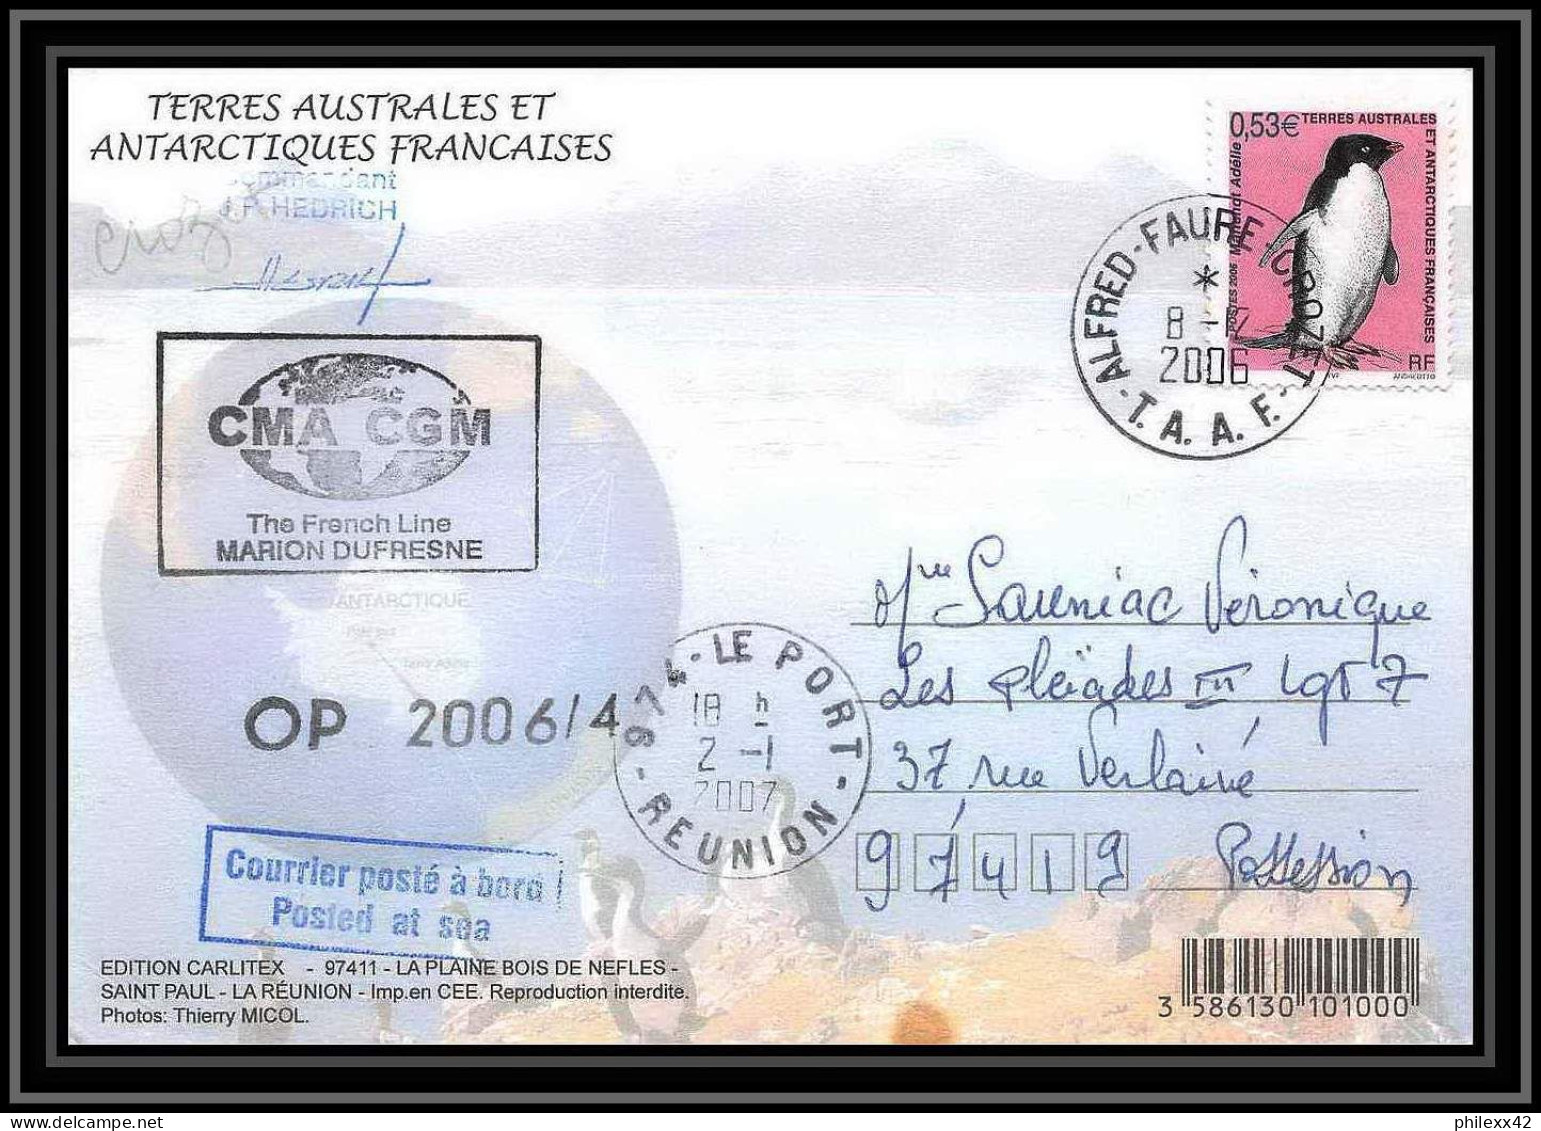 2642 ANTARCTIC Terres Australes (taaf)-carte Postale Dufresne 2 Signé Signed OP 2006/4 CROZET N°448 8/2/2006 - Spedizioni Antartiche